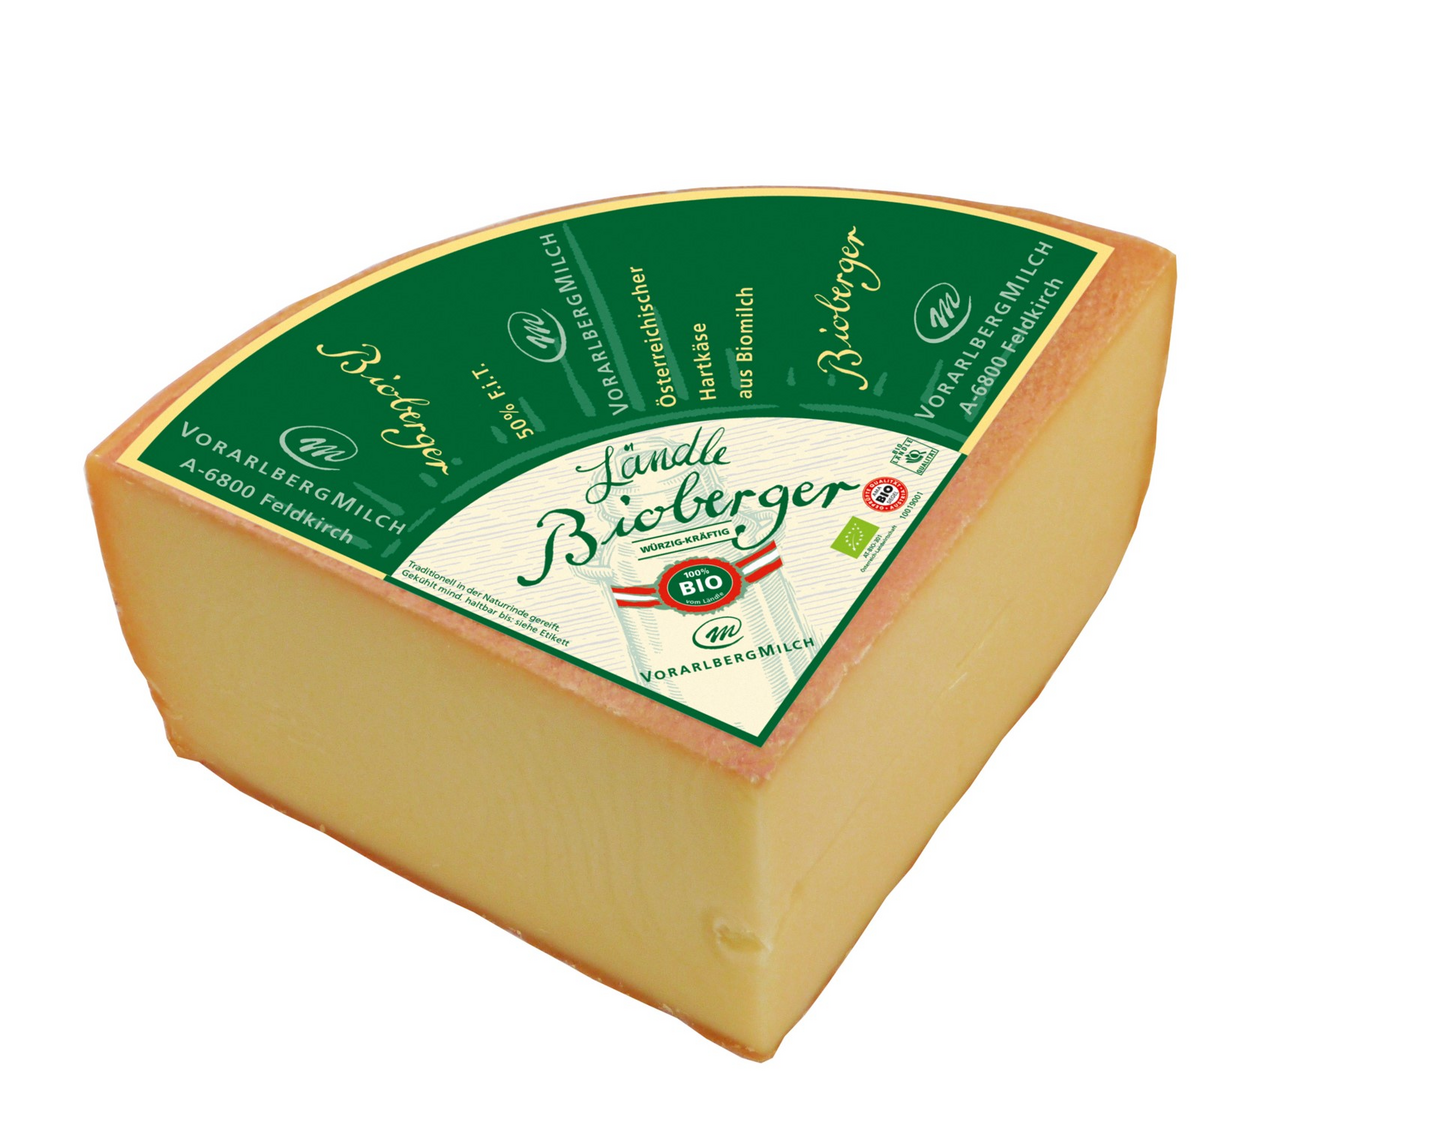 Vorarlberg Milch Ländle Bioberger, Itävaltalainen kova juusto